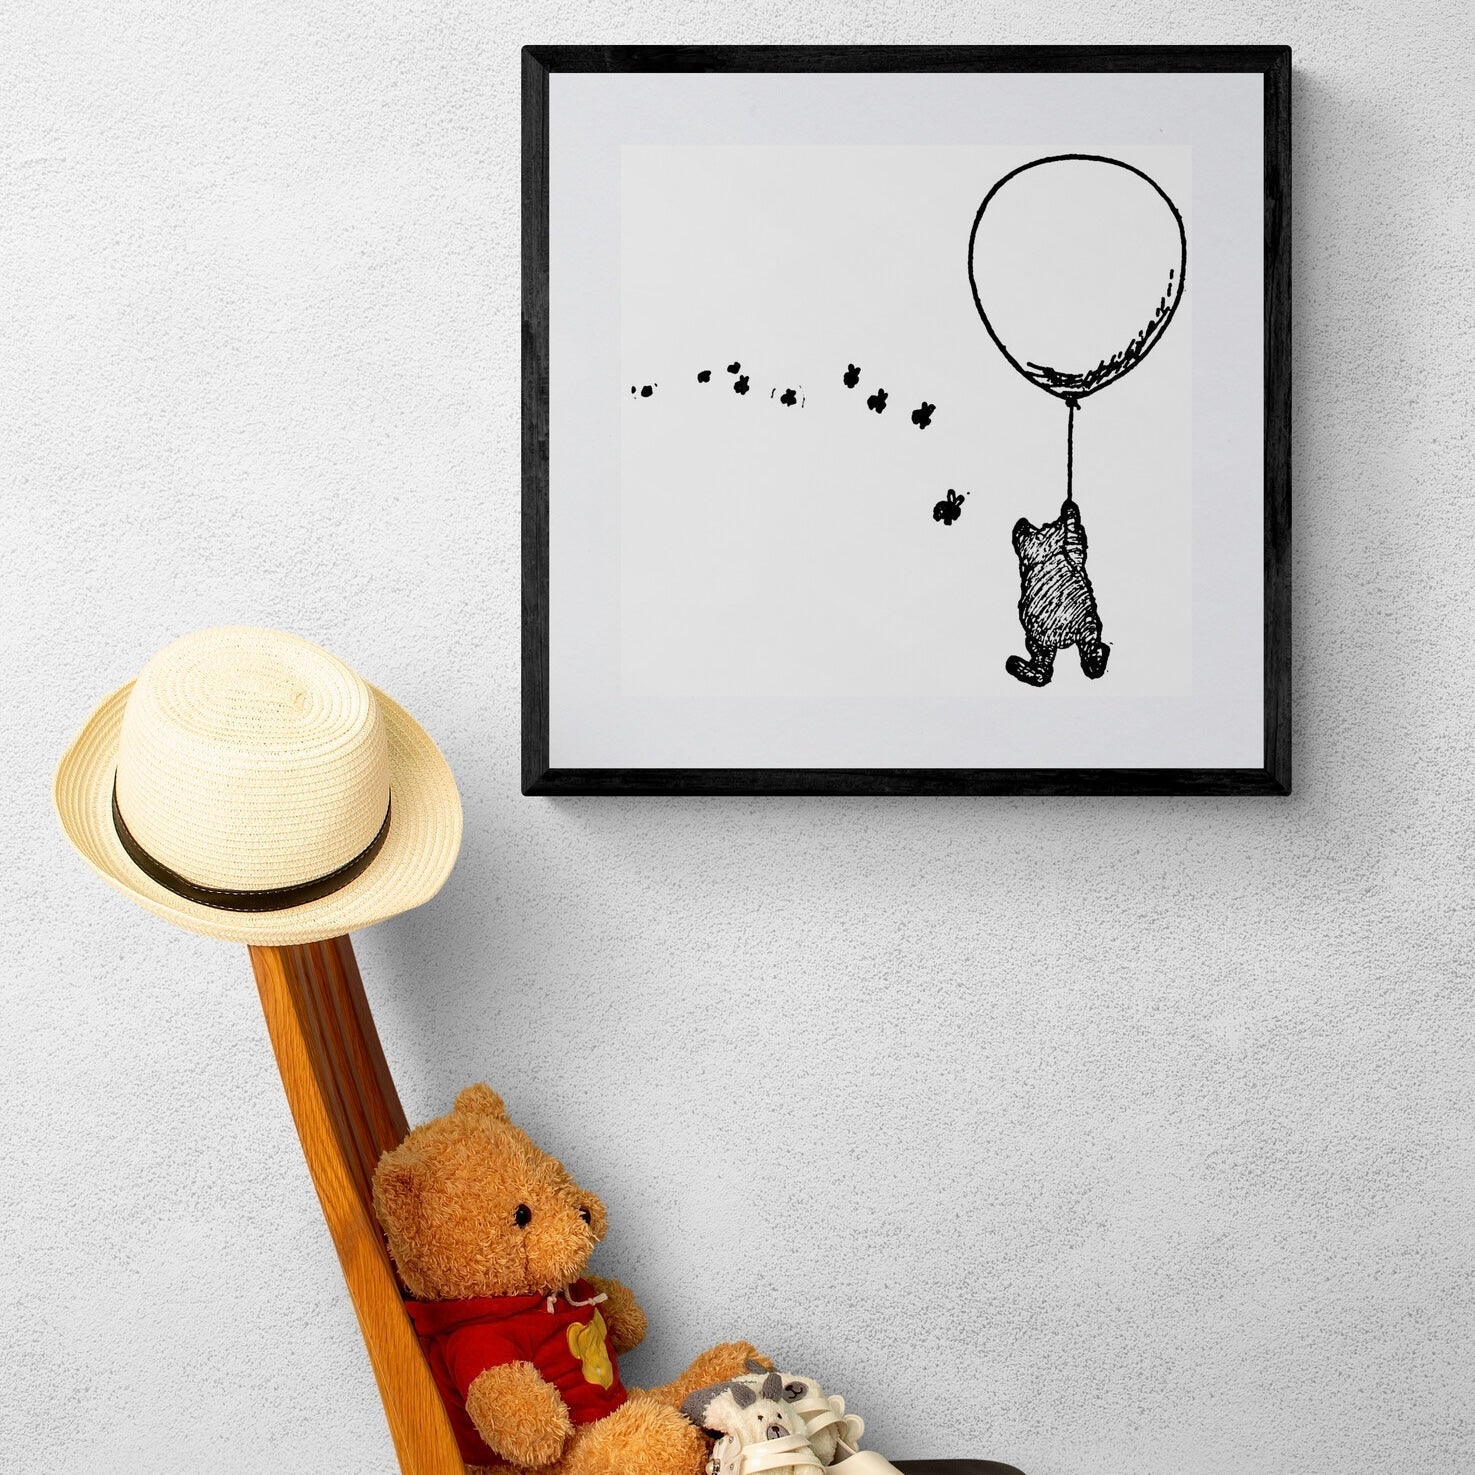 Winnie the Pooh artwork